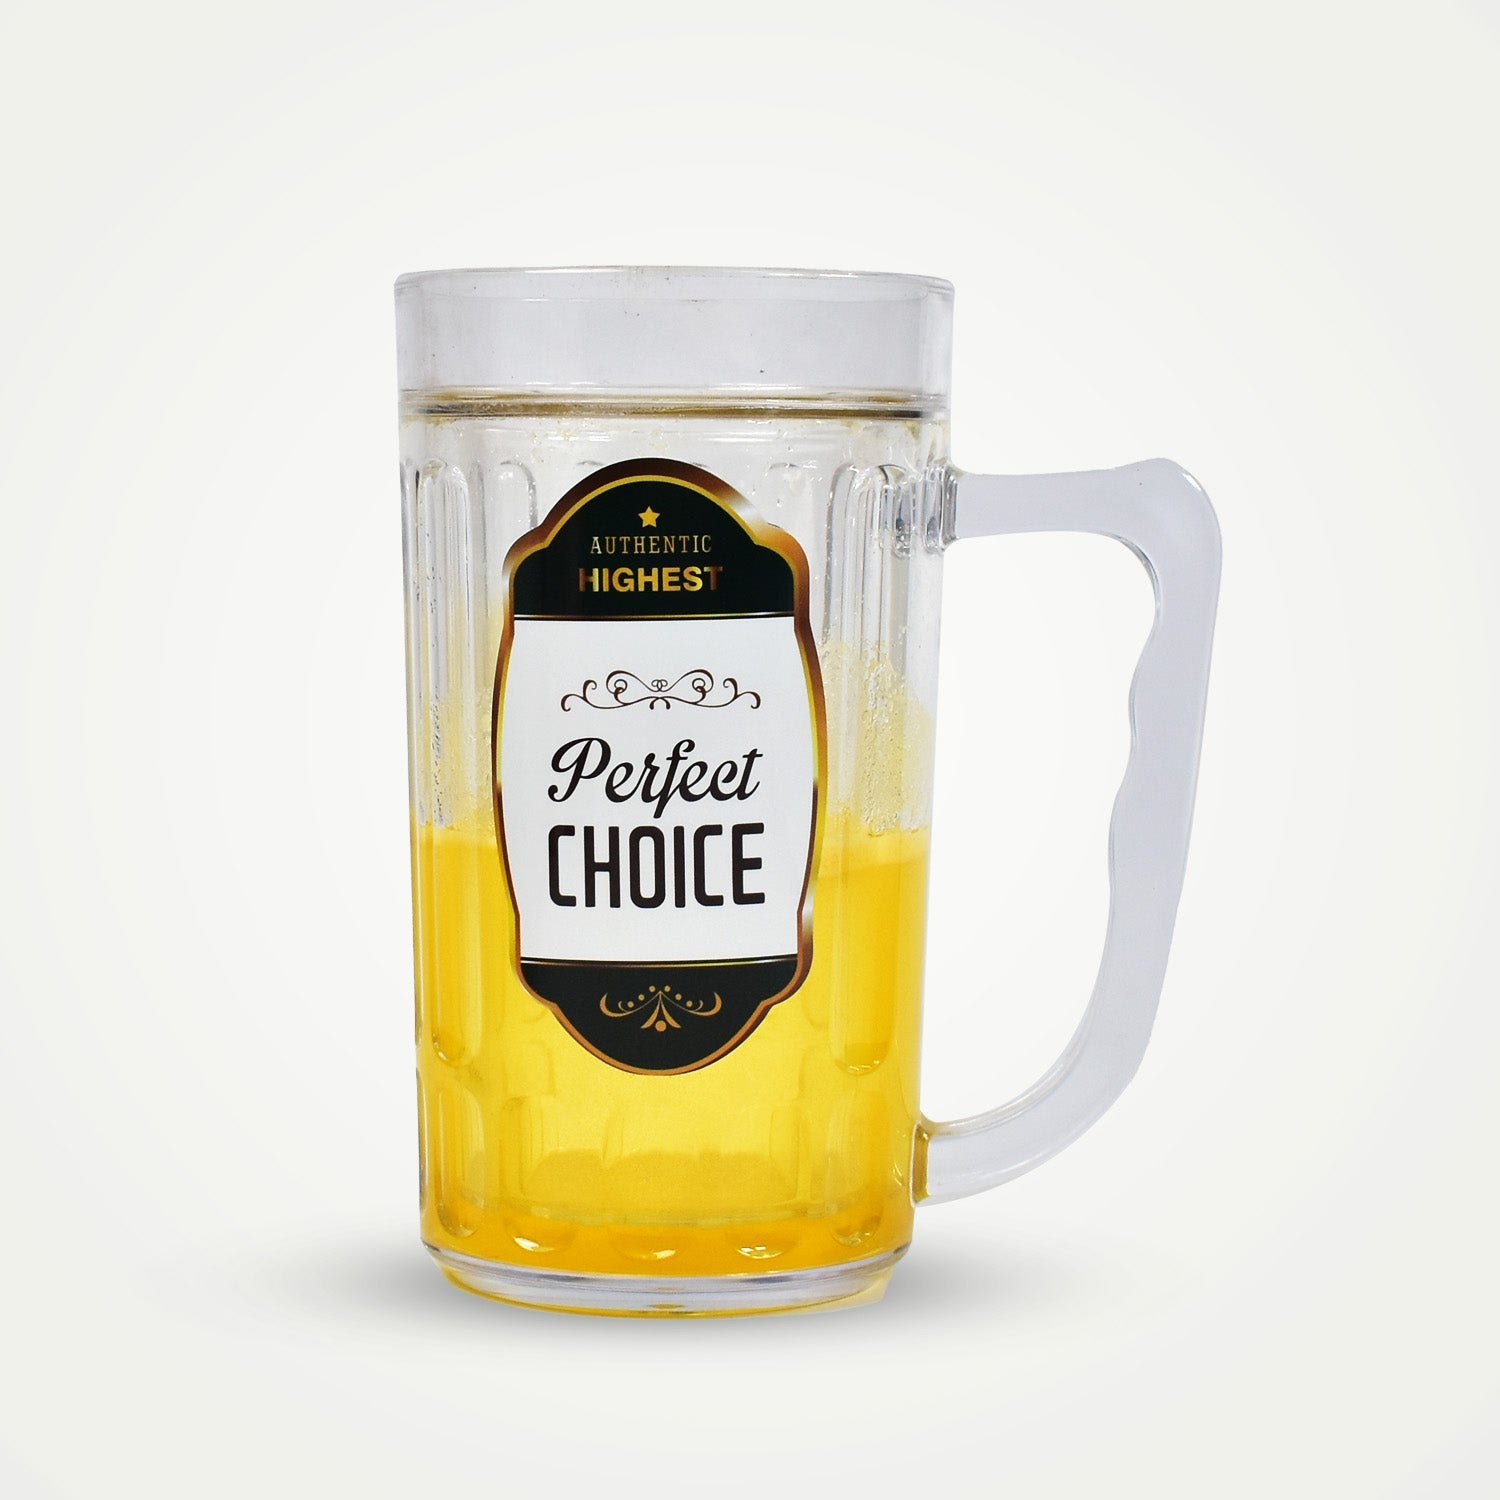 6832 420ml Large Beer Mug with Handle Crystal Clear Lead Free Mug Beer Mug, Beer Glass | Perfect for Home, Bars and parties-1Piece. DeoDap